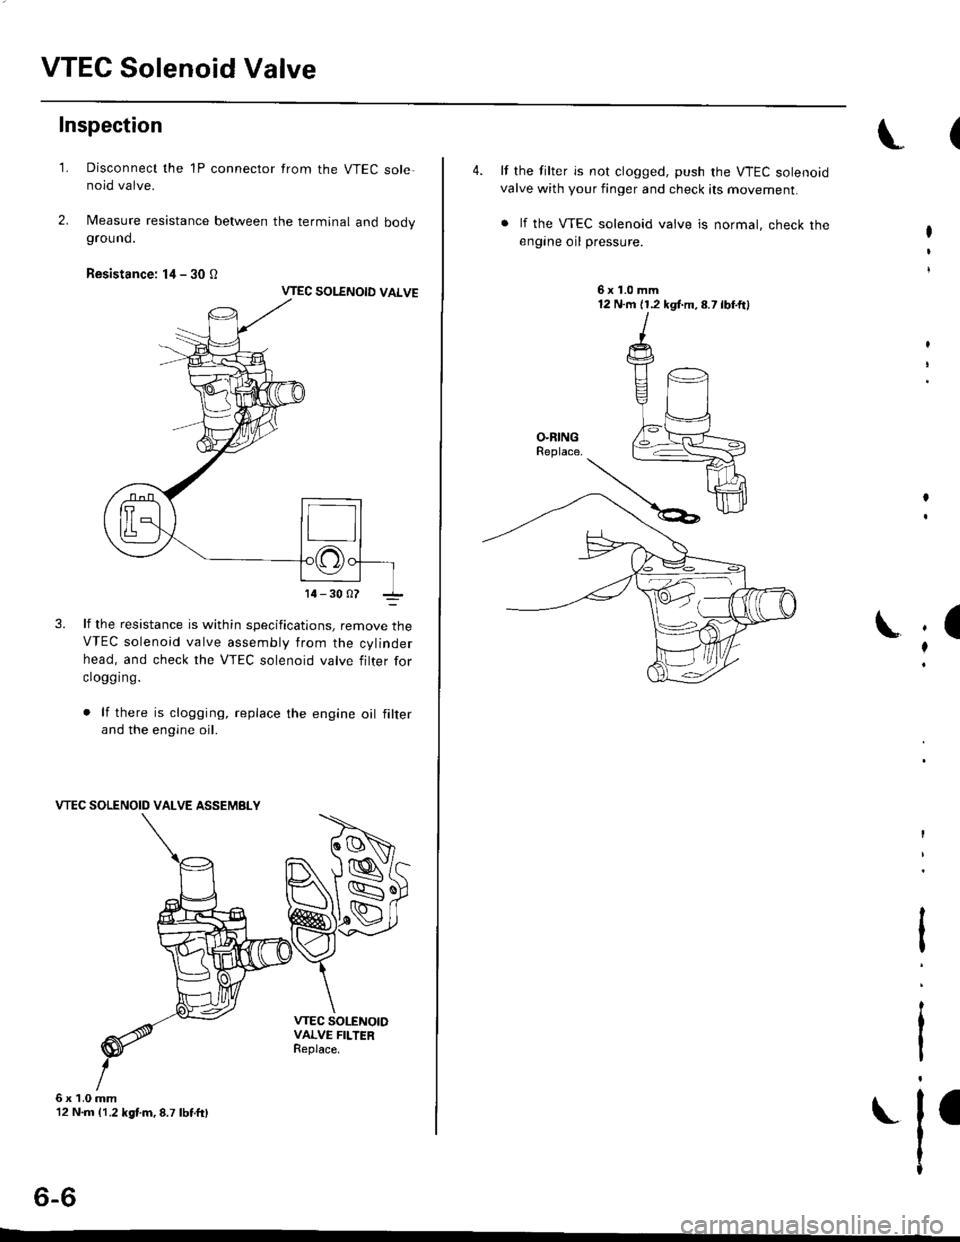 HONDA CIVIC 1998 6.G Workshop Manual VTEC Solenoid Valve
Inspection
1.
6x1.0mm12 N.m 11.2 kgf.m,8.7 lbtft)
Disconnect the 1P connector from the VTEC sole-noid valve.
Measure resistance between the terminal and bodyground.
Resistance: l4 